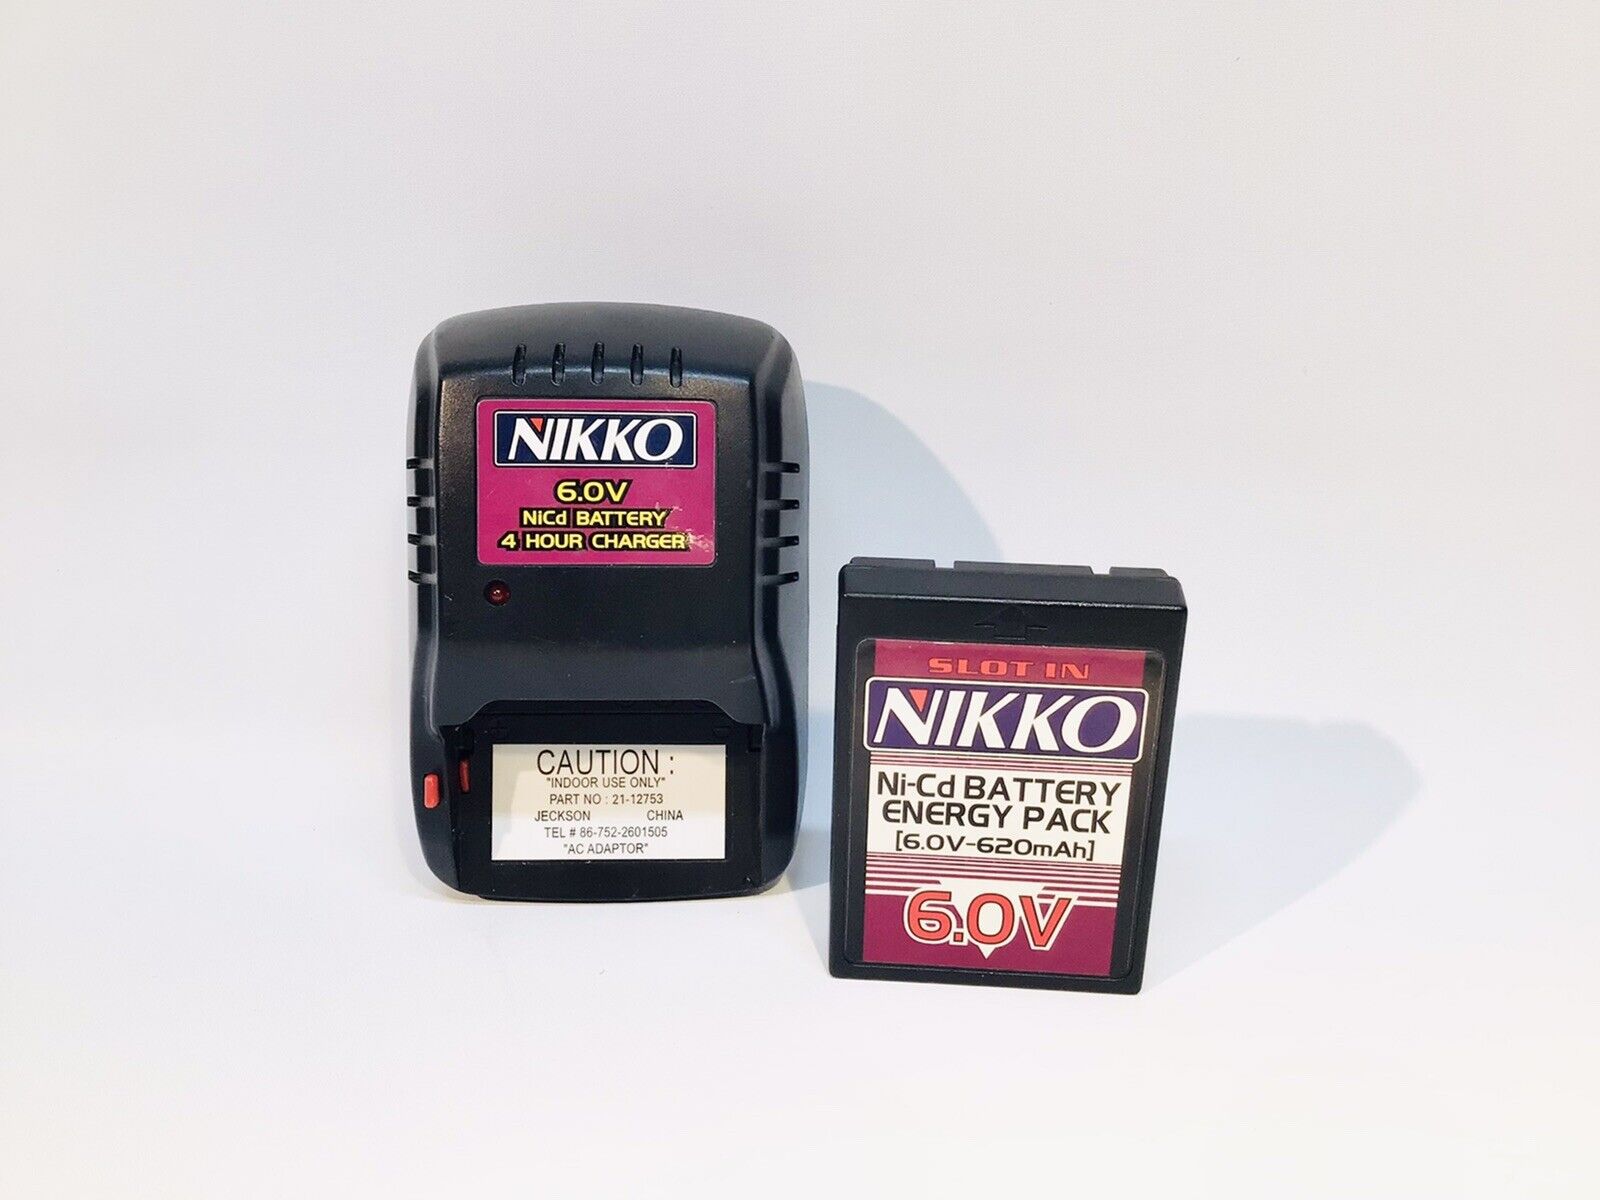 Nikko 6.0V Volt NiCd 4 Hour R/C Battery Charger + Battery Pack